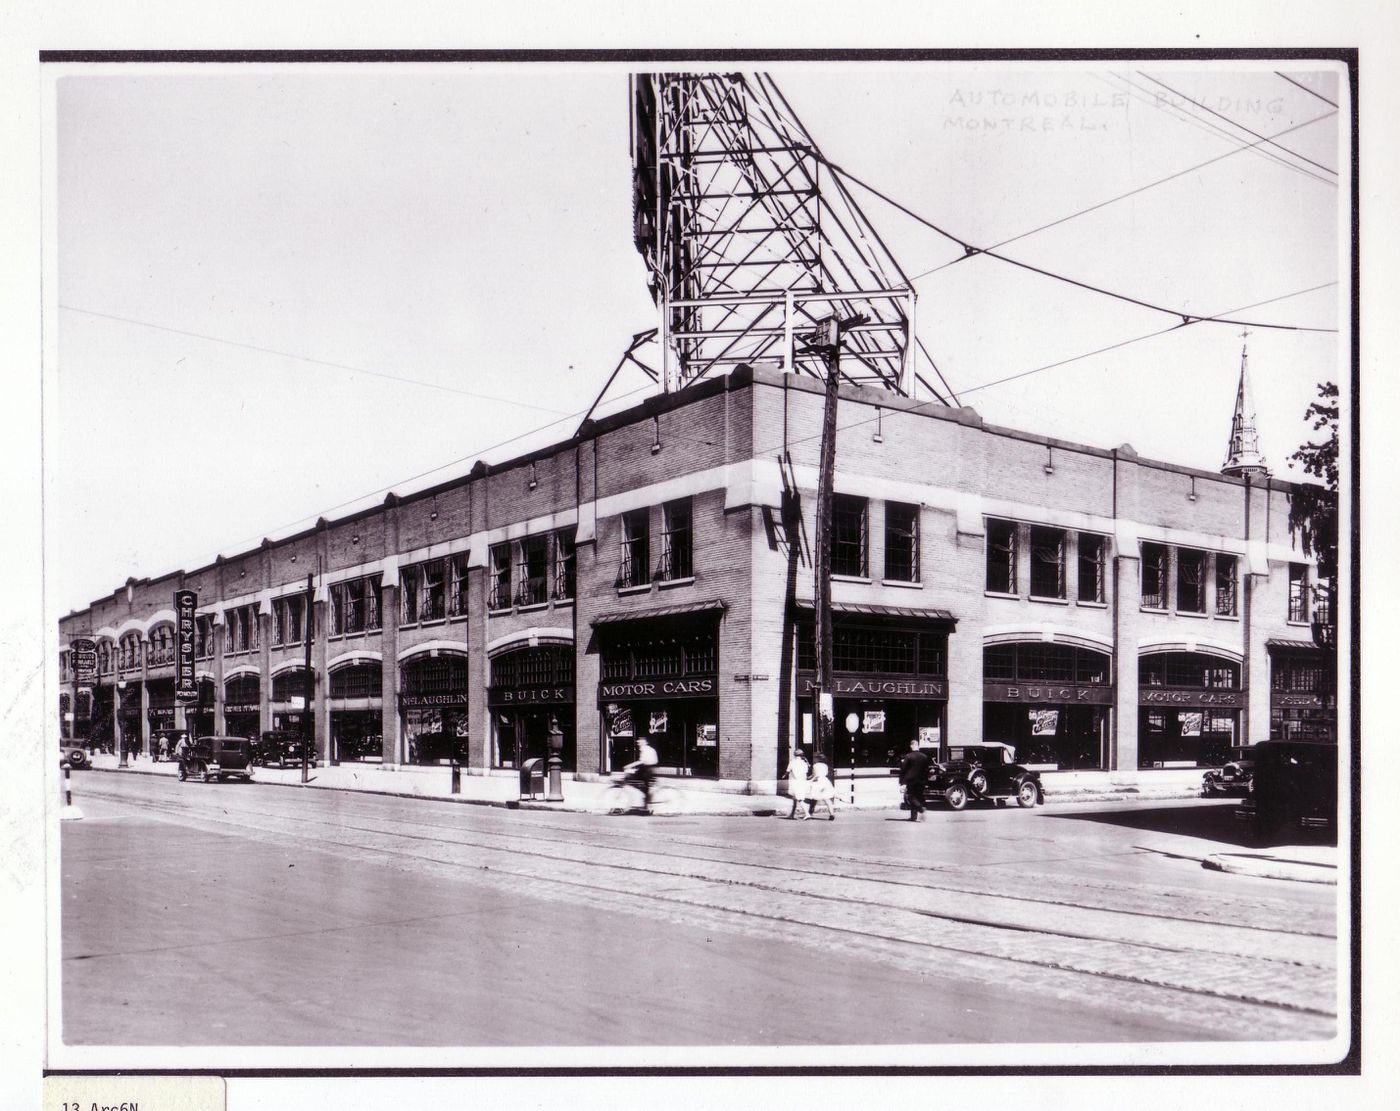 Automobile Sales Building, Saint Catherine St. facade and west elevation